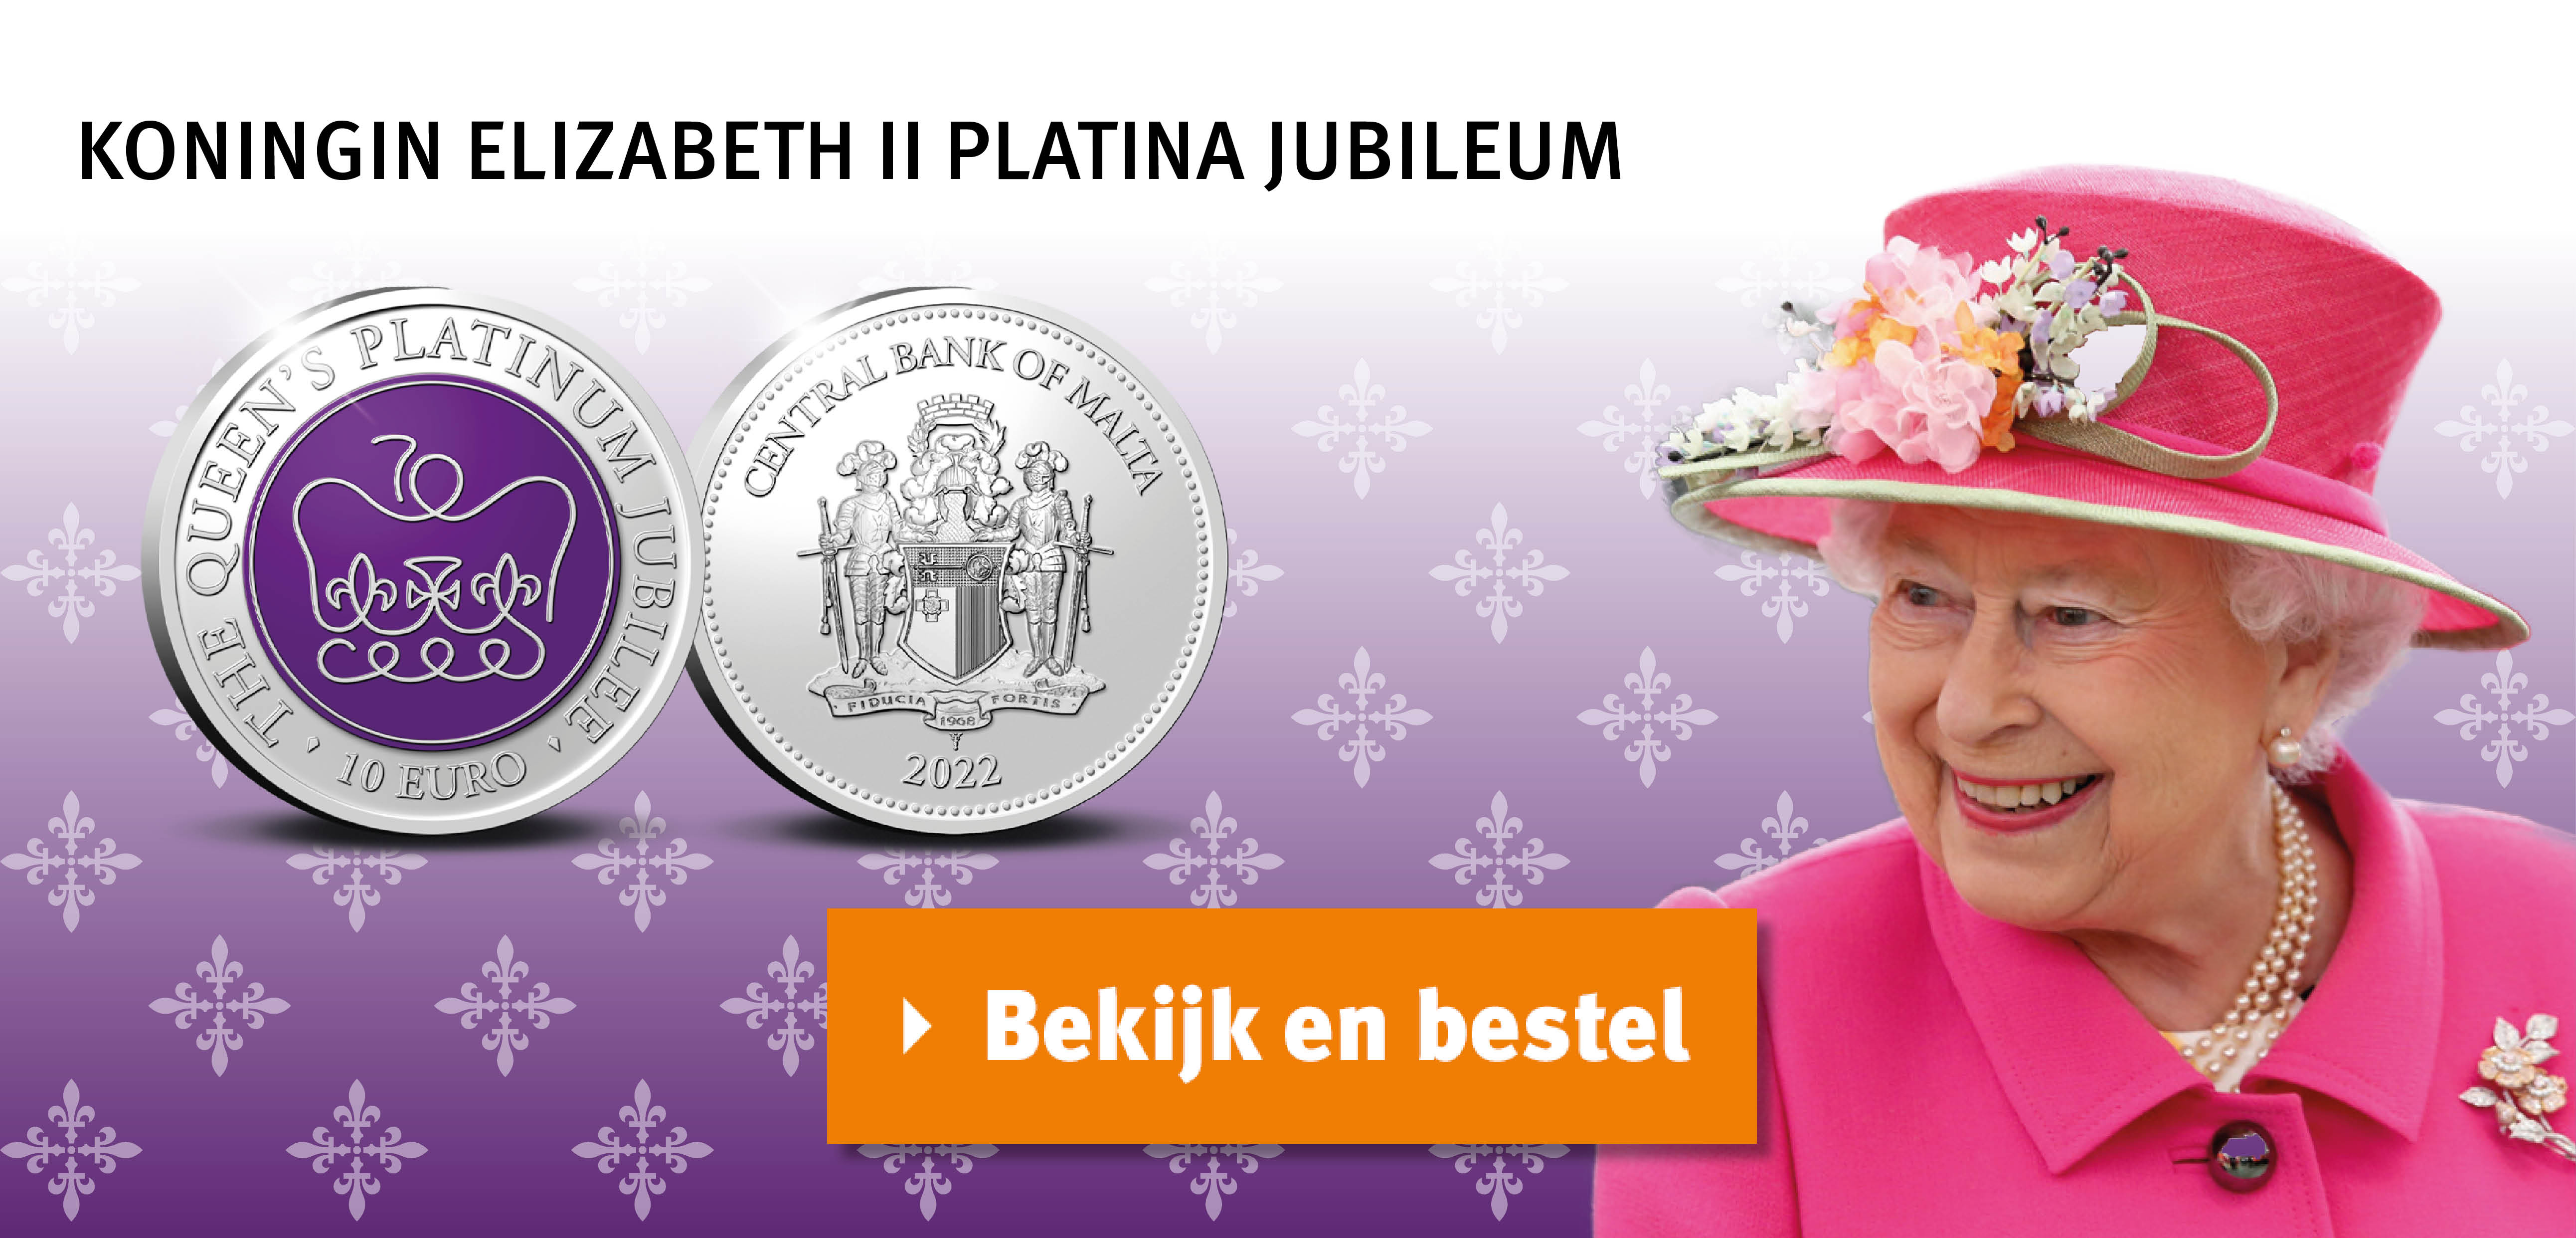 Bekijk en bestel: Koningin Elizabeth II Platina Jubileum